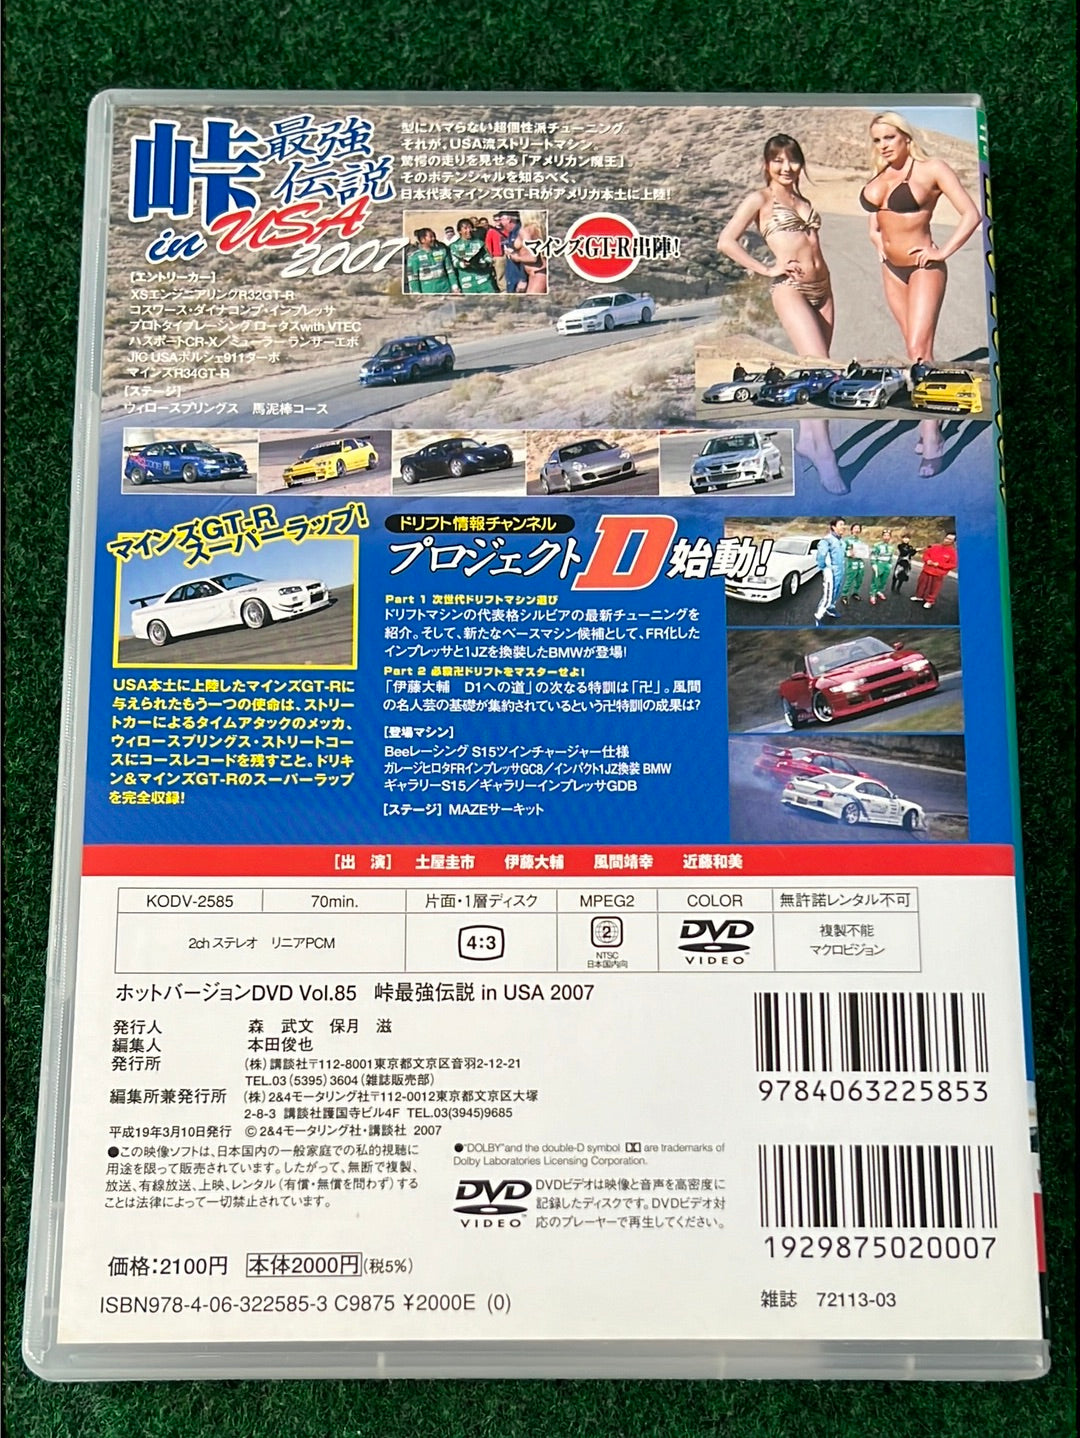 Hot Version DVD - Vol. 85